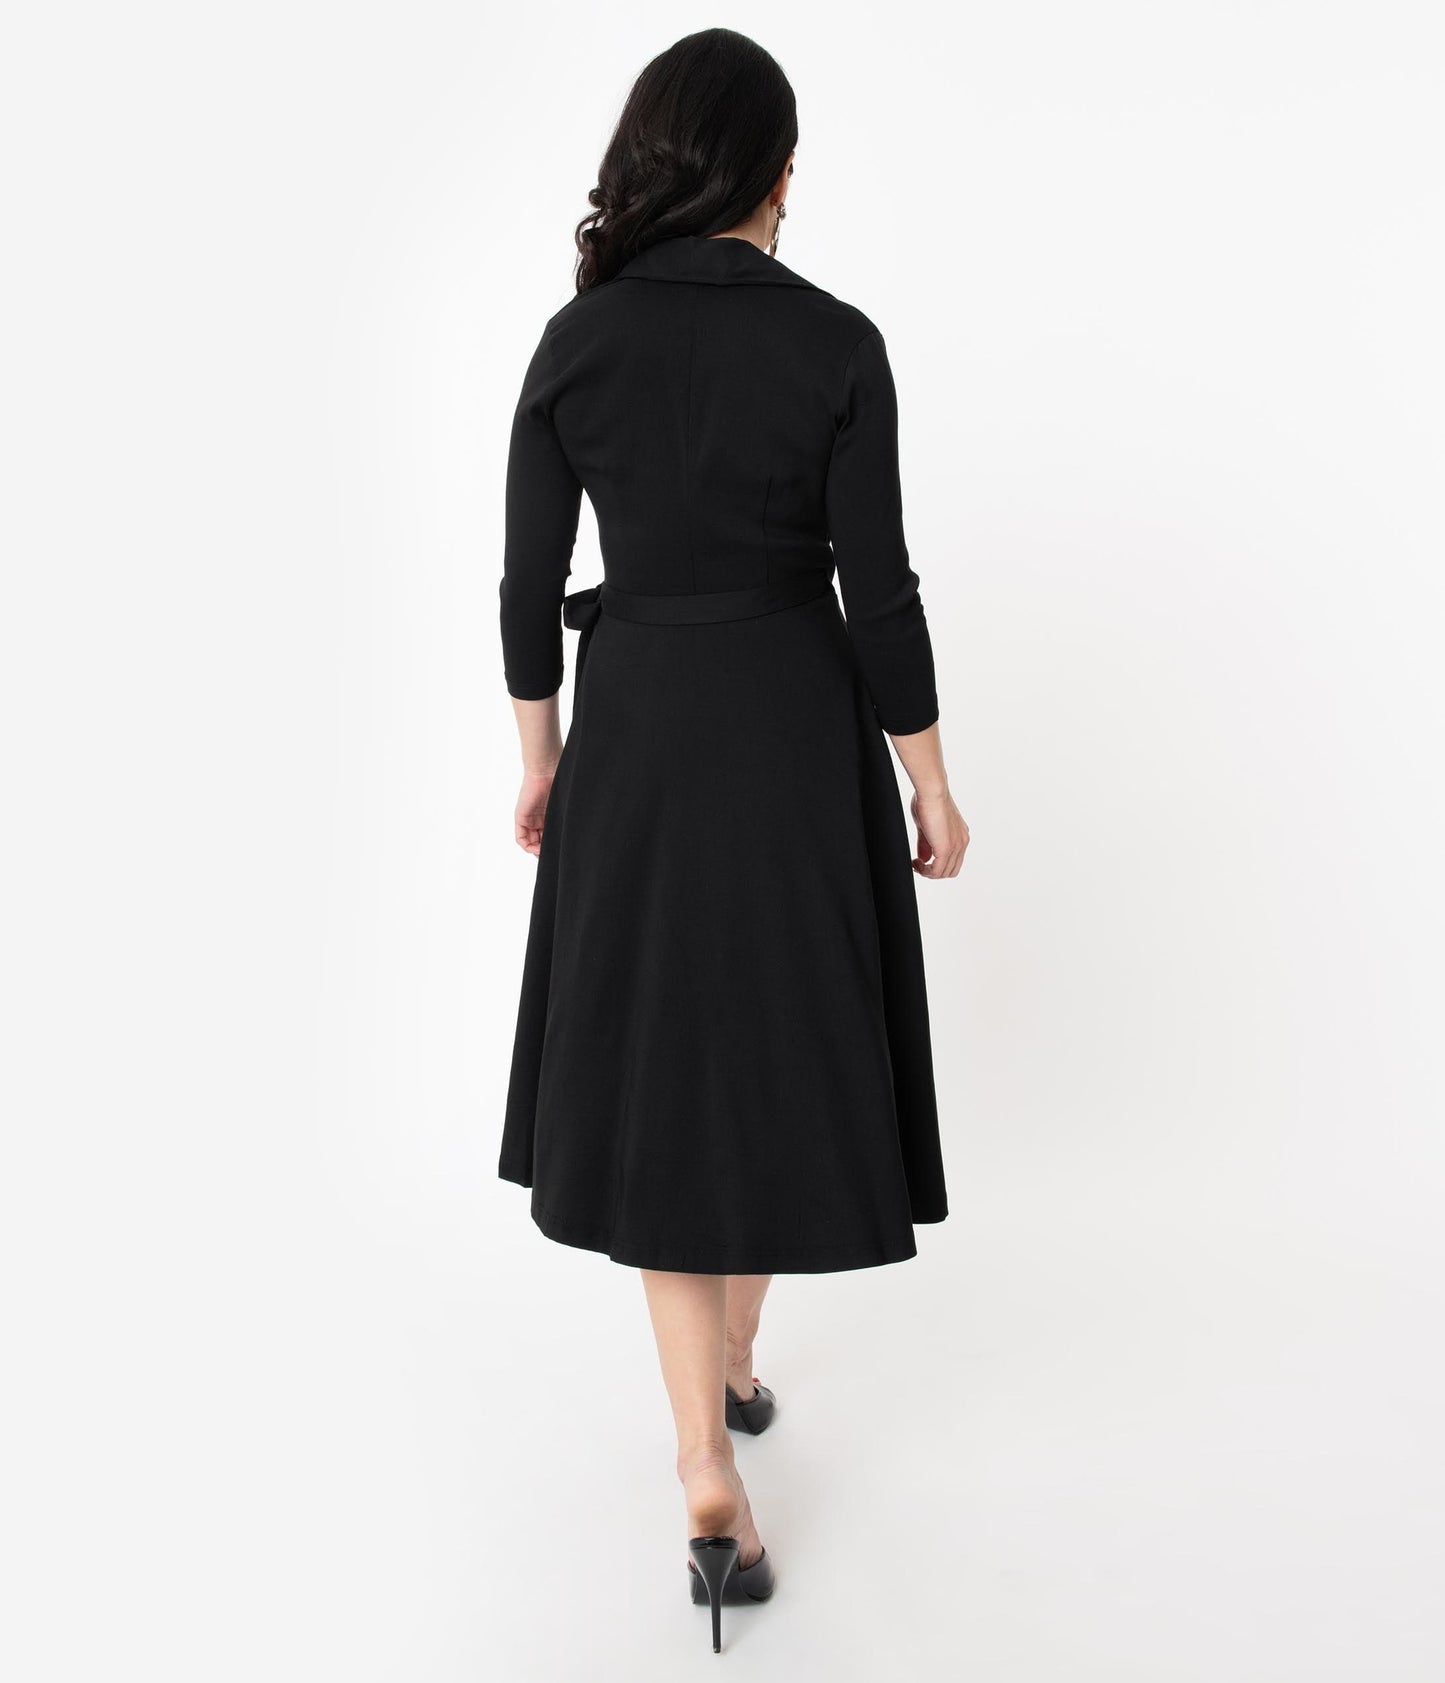 Unique Vintage 1950s Style Black Stretch Sleeved Anna Wrap Dress